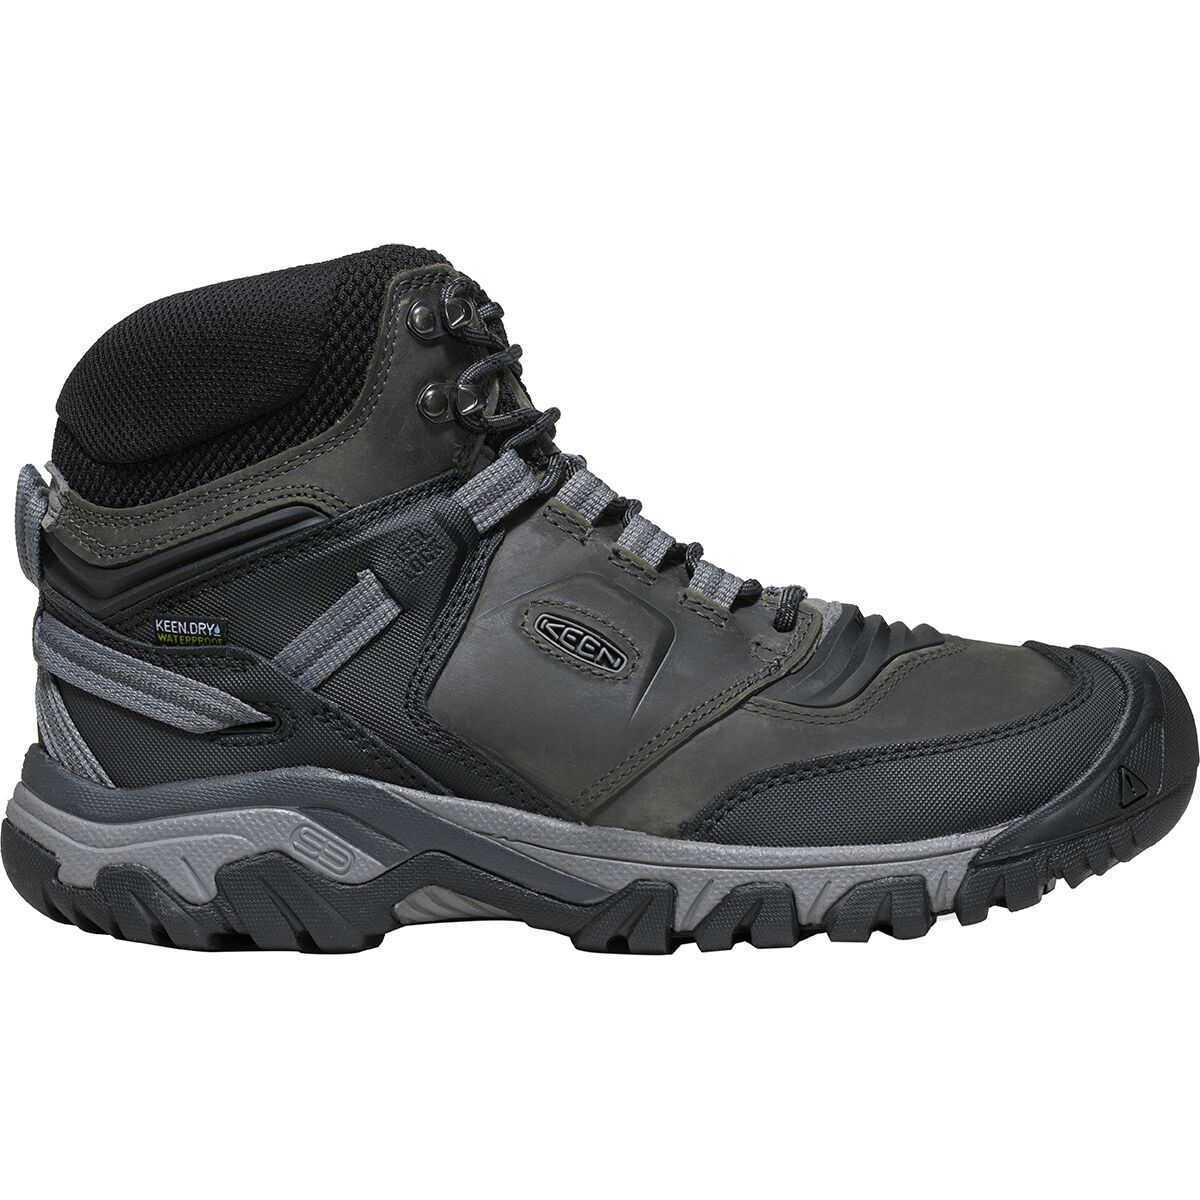 KEEN Ridge Flex Mid WP Hiking Boot - Men's -  191190760253